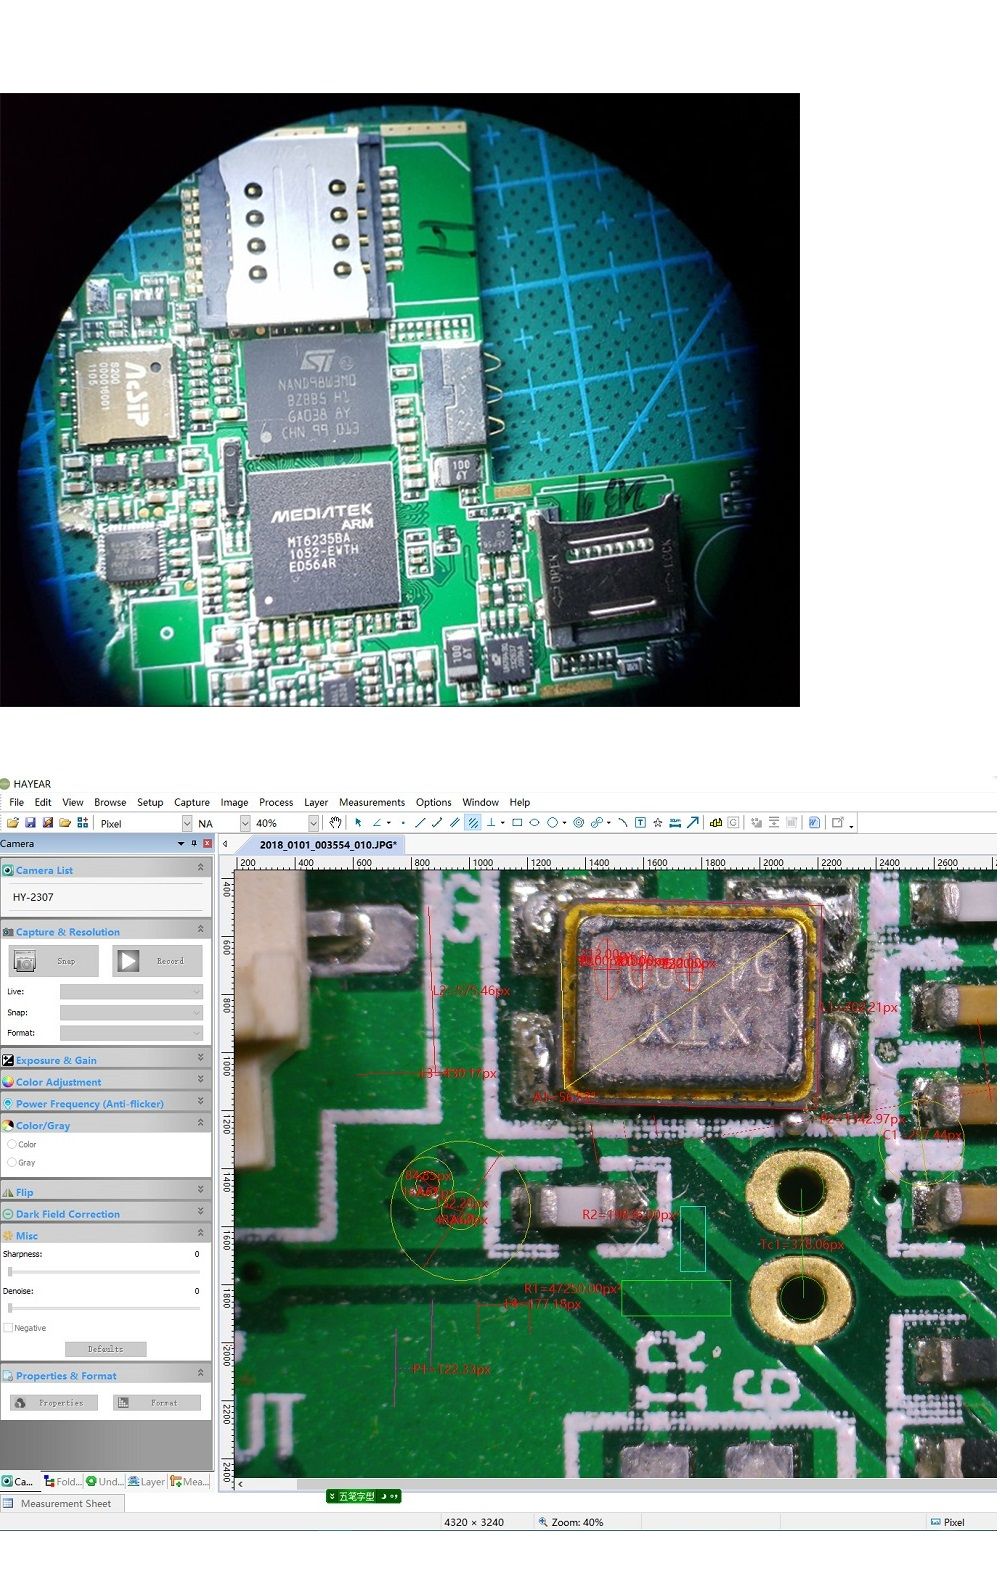 21MP-2K-HD-USB-Microscope-Camera-with-56-LED-Light-Trinocular-Stereo-Microscope-Zoom-7X-45X-Repair-M-1520086